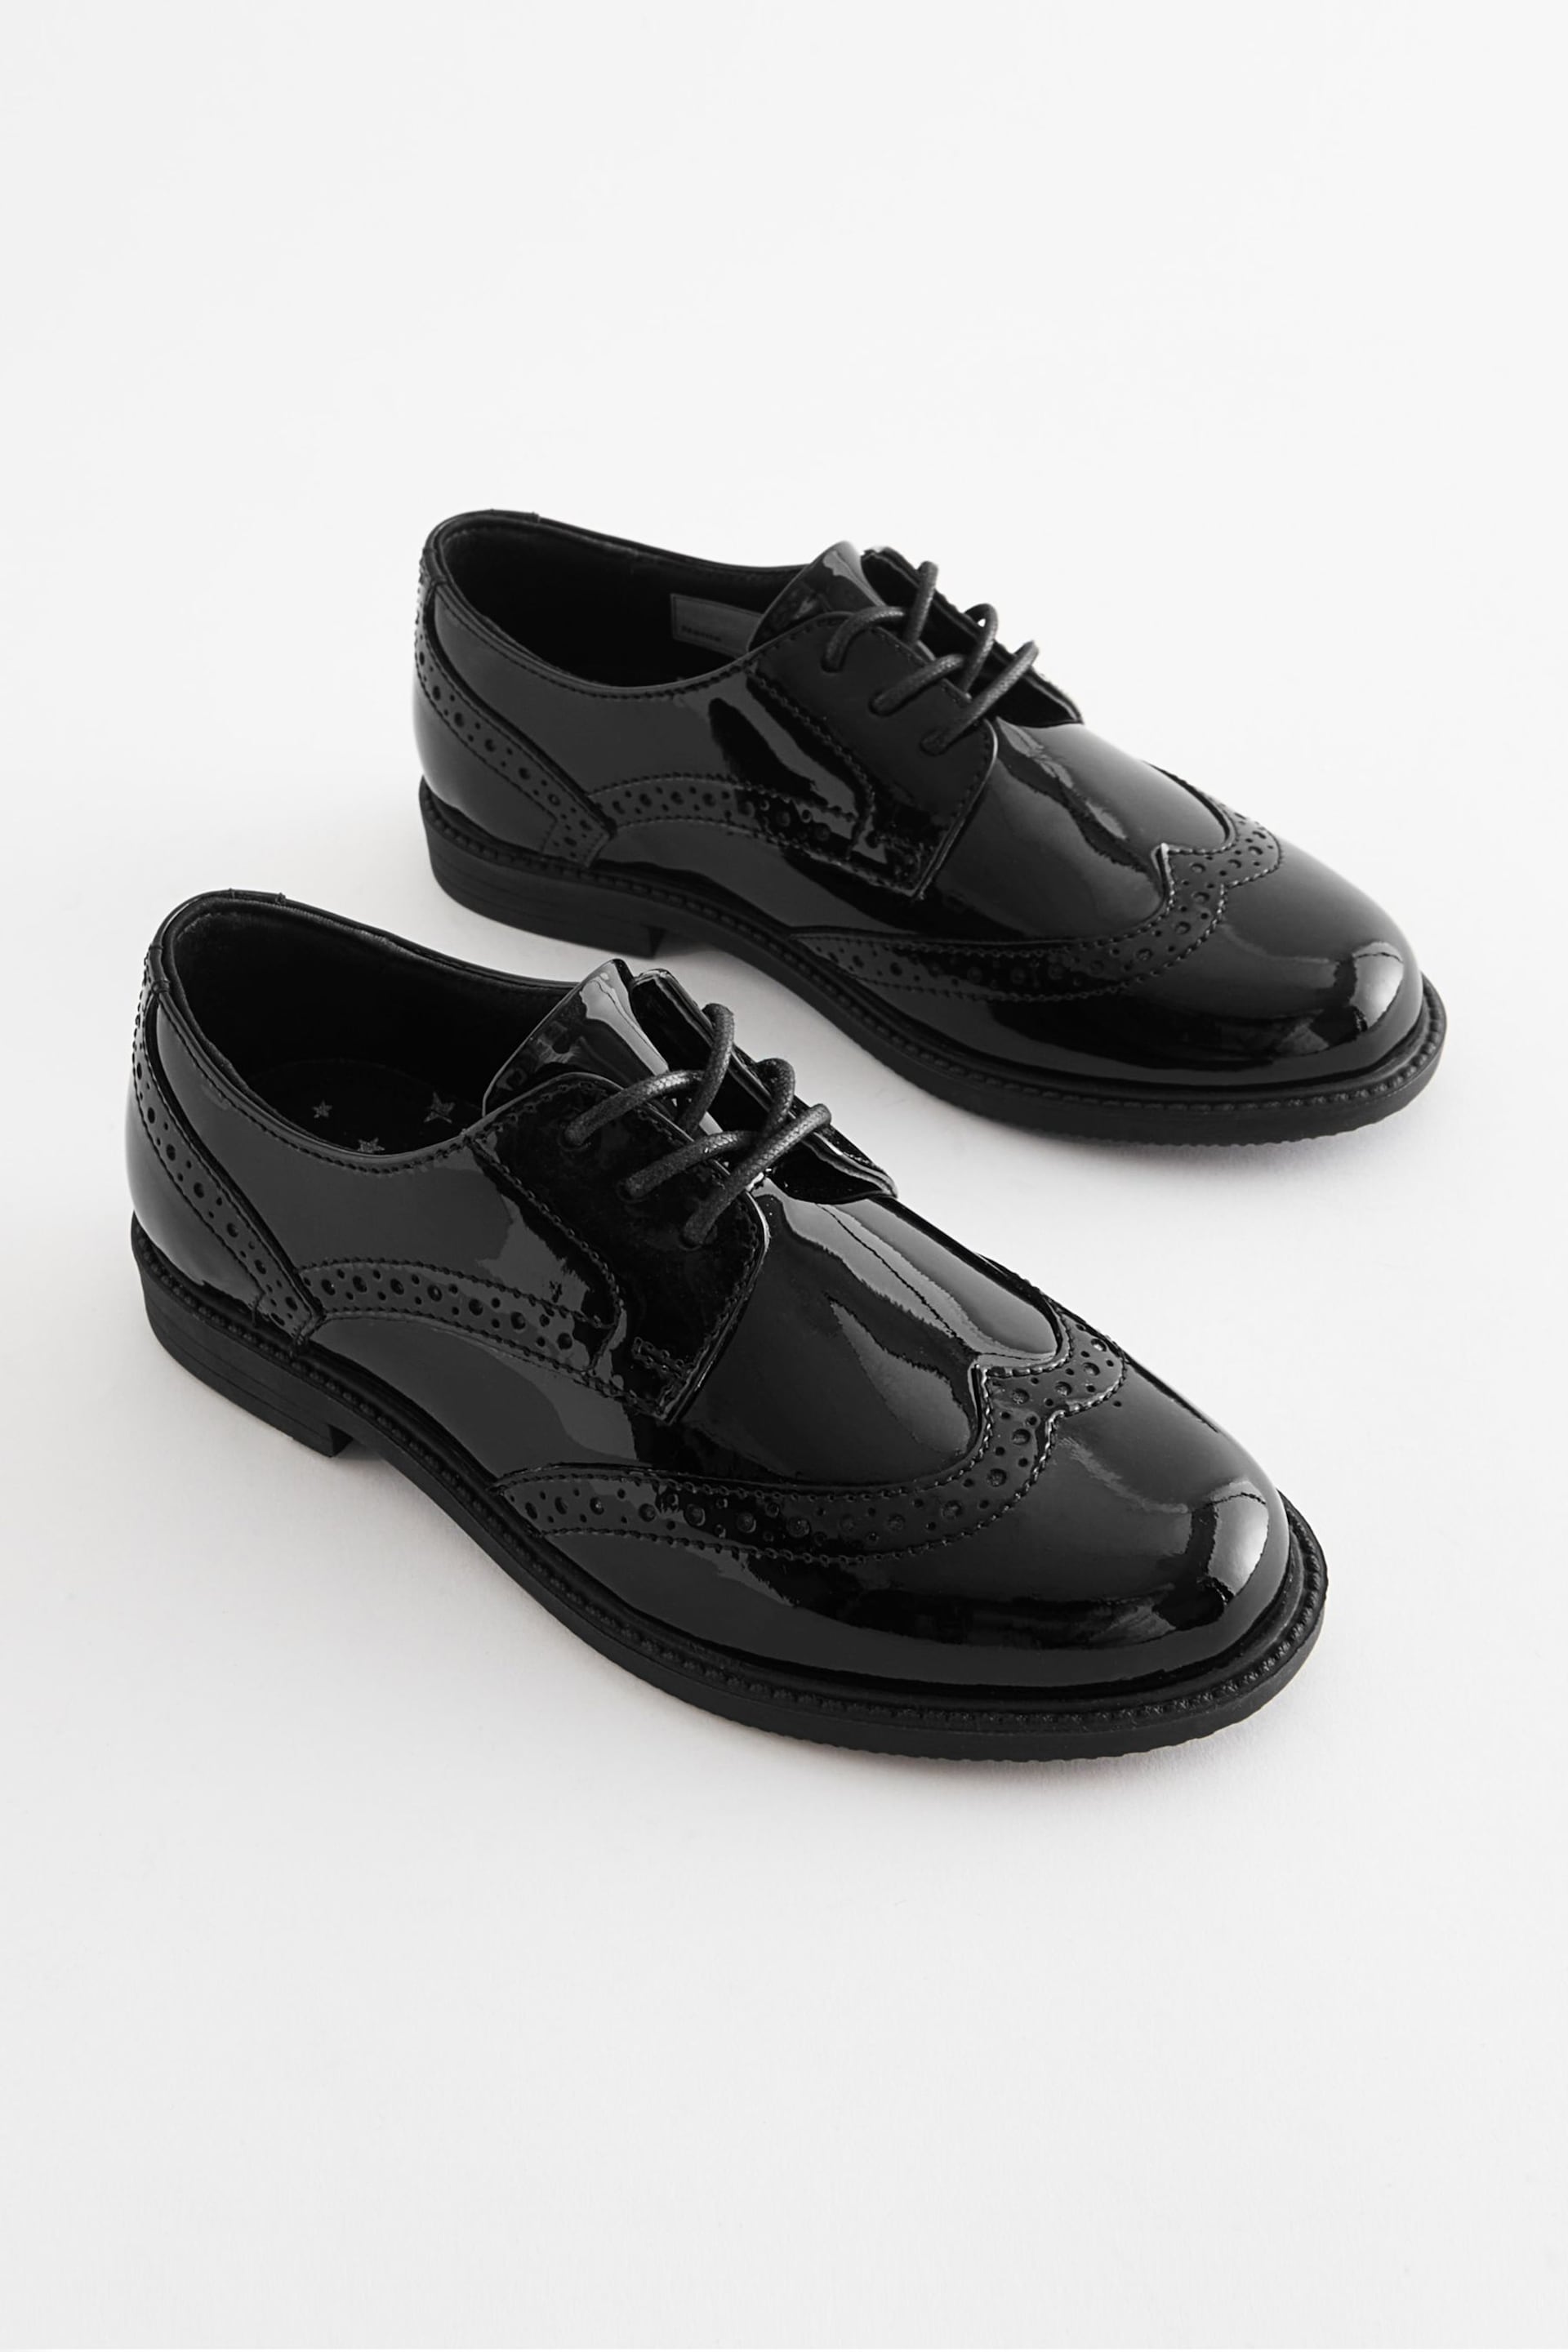 Black Patent School Lace-Up Brogue Detail Shoes - Image 1 of 6